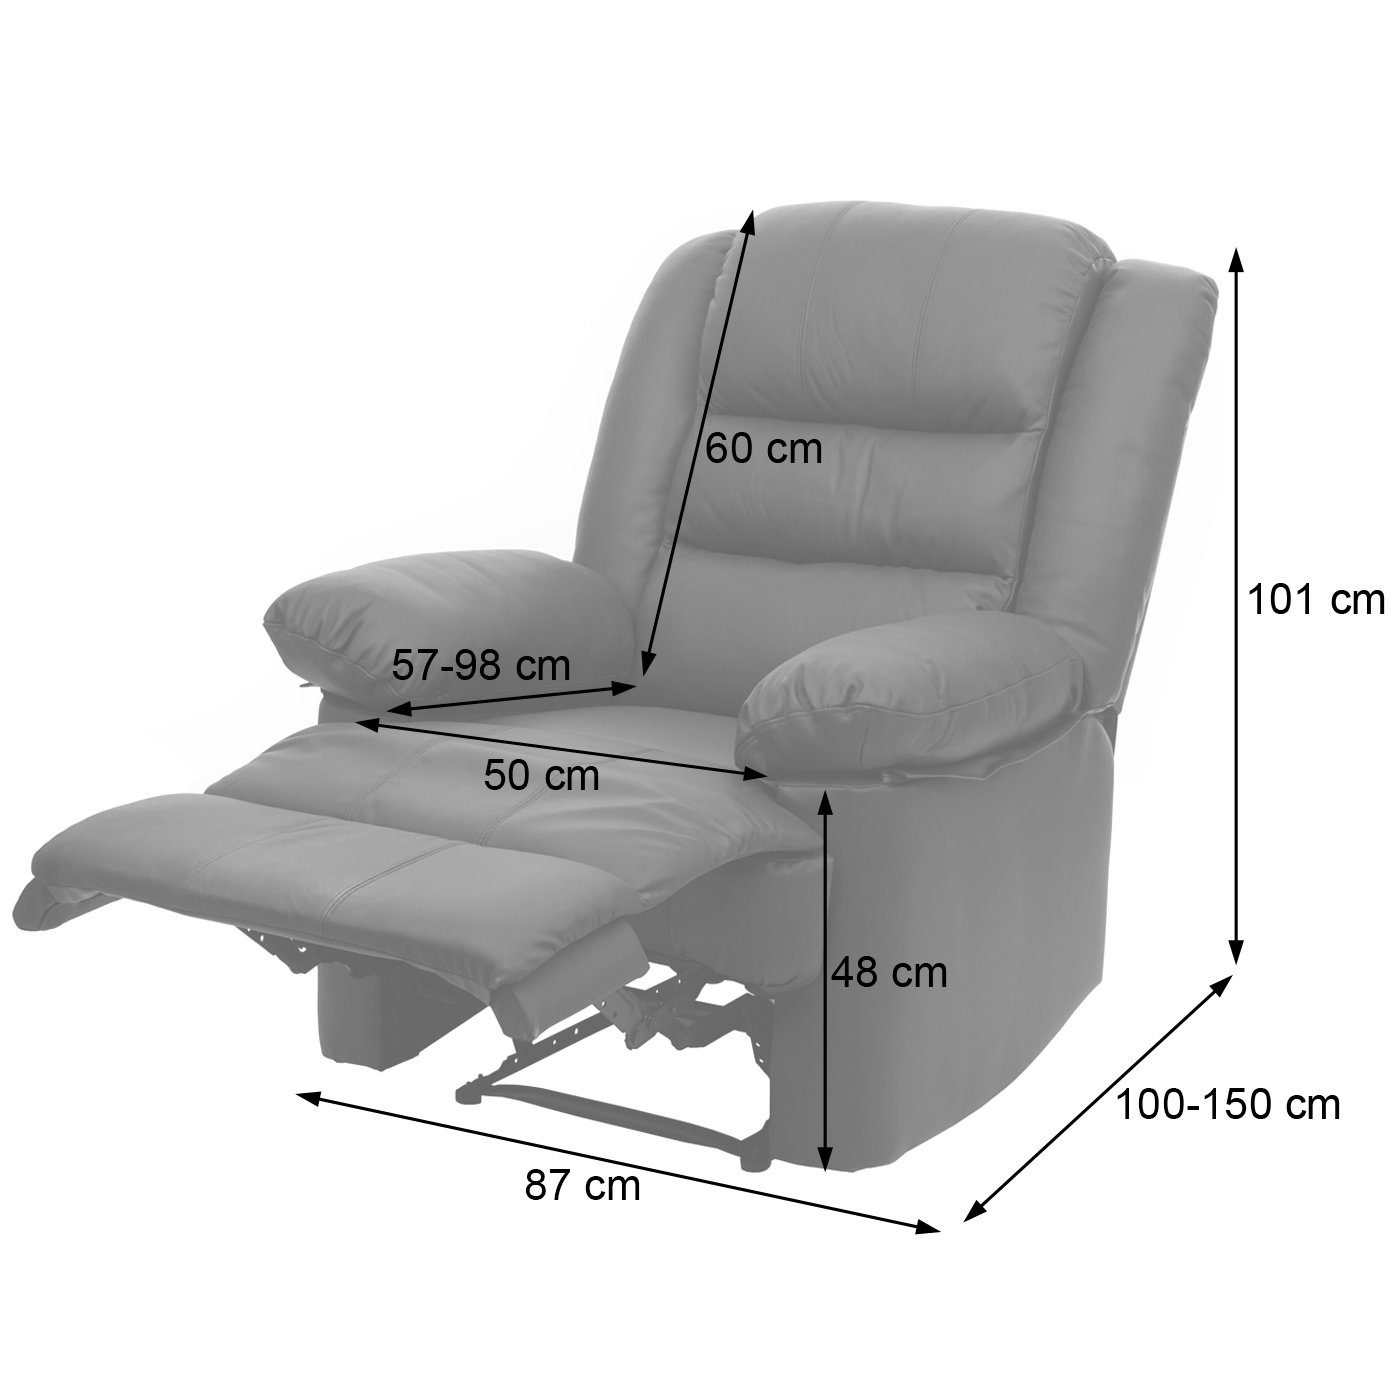 verstellbar, MCW-G15, Fußstütze 165 cm, Liegefunktion Liegefläche: MCW creme Verstellbare Rückenfläche, TV-Sessel